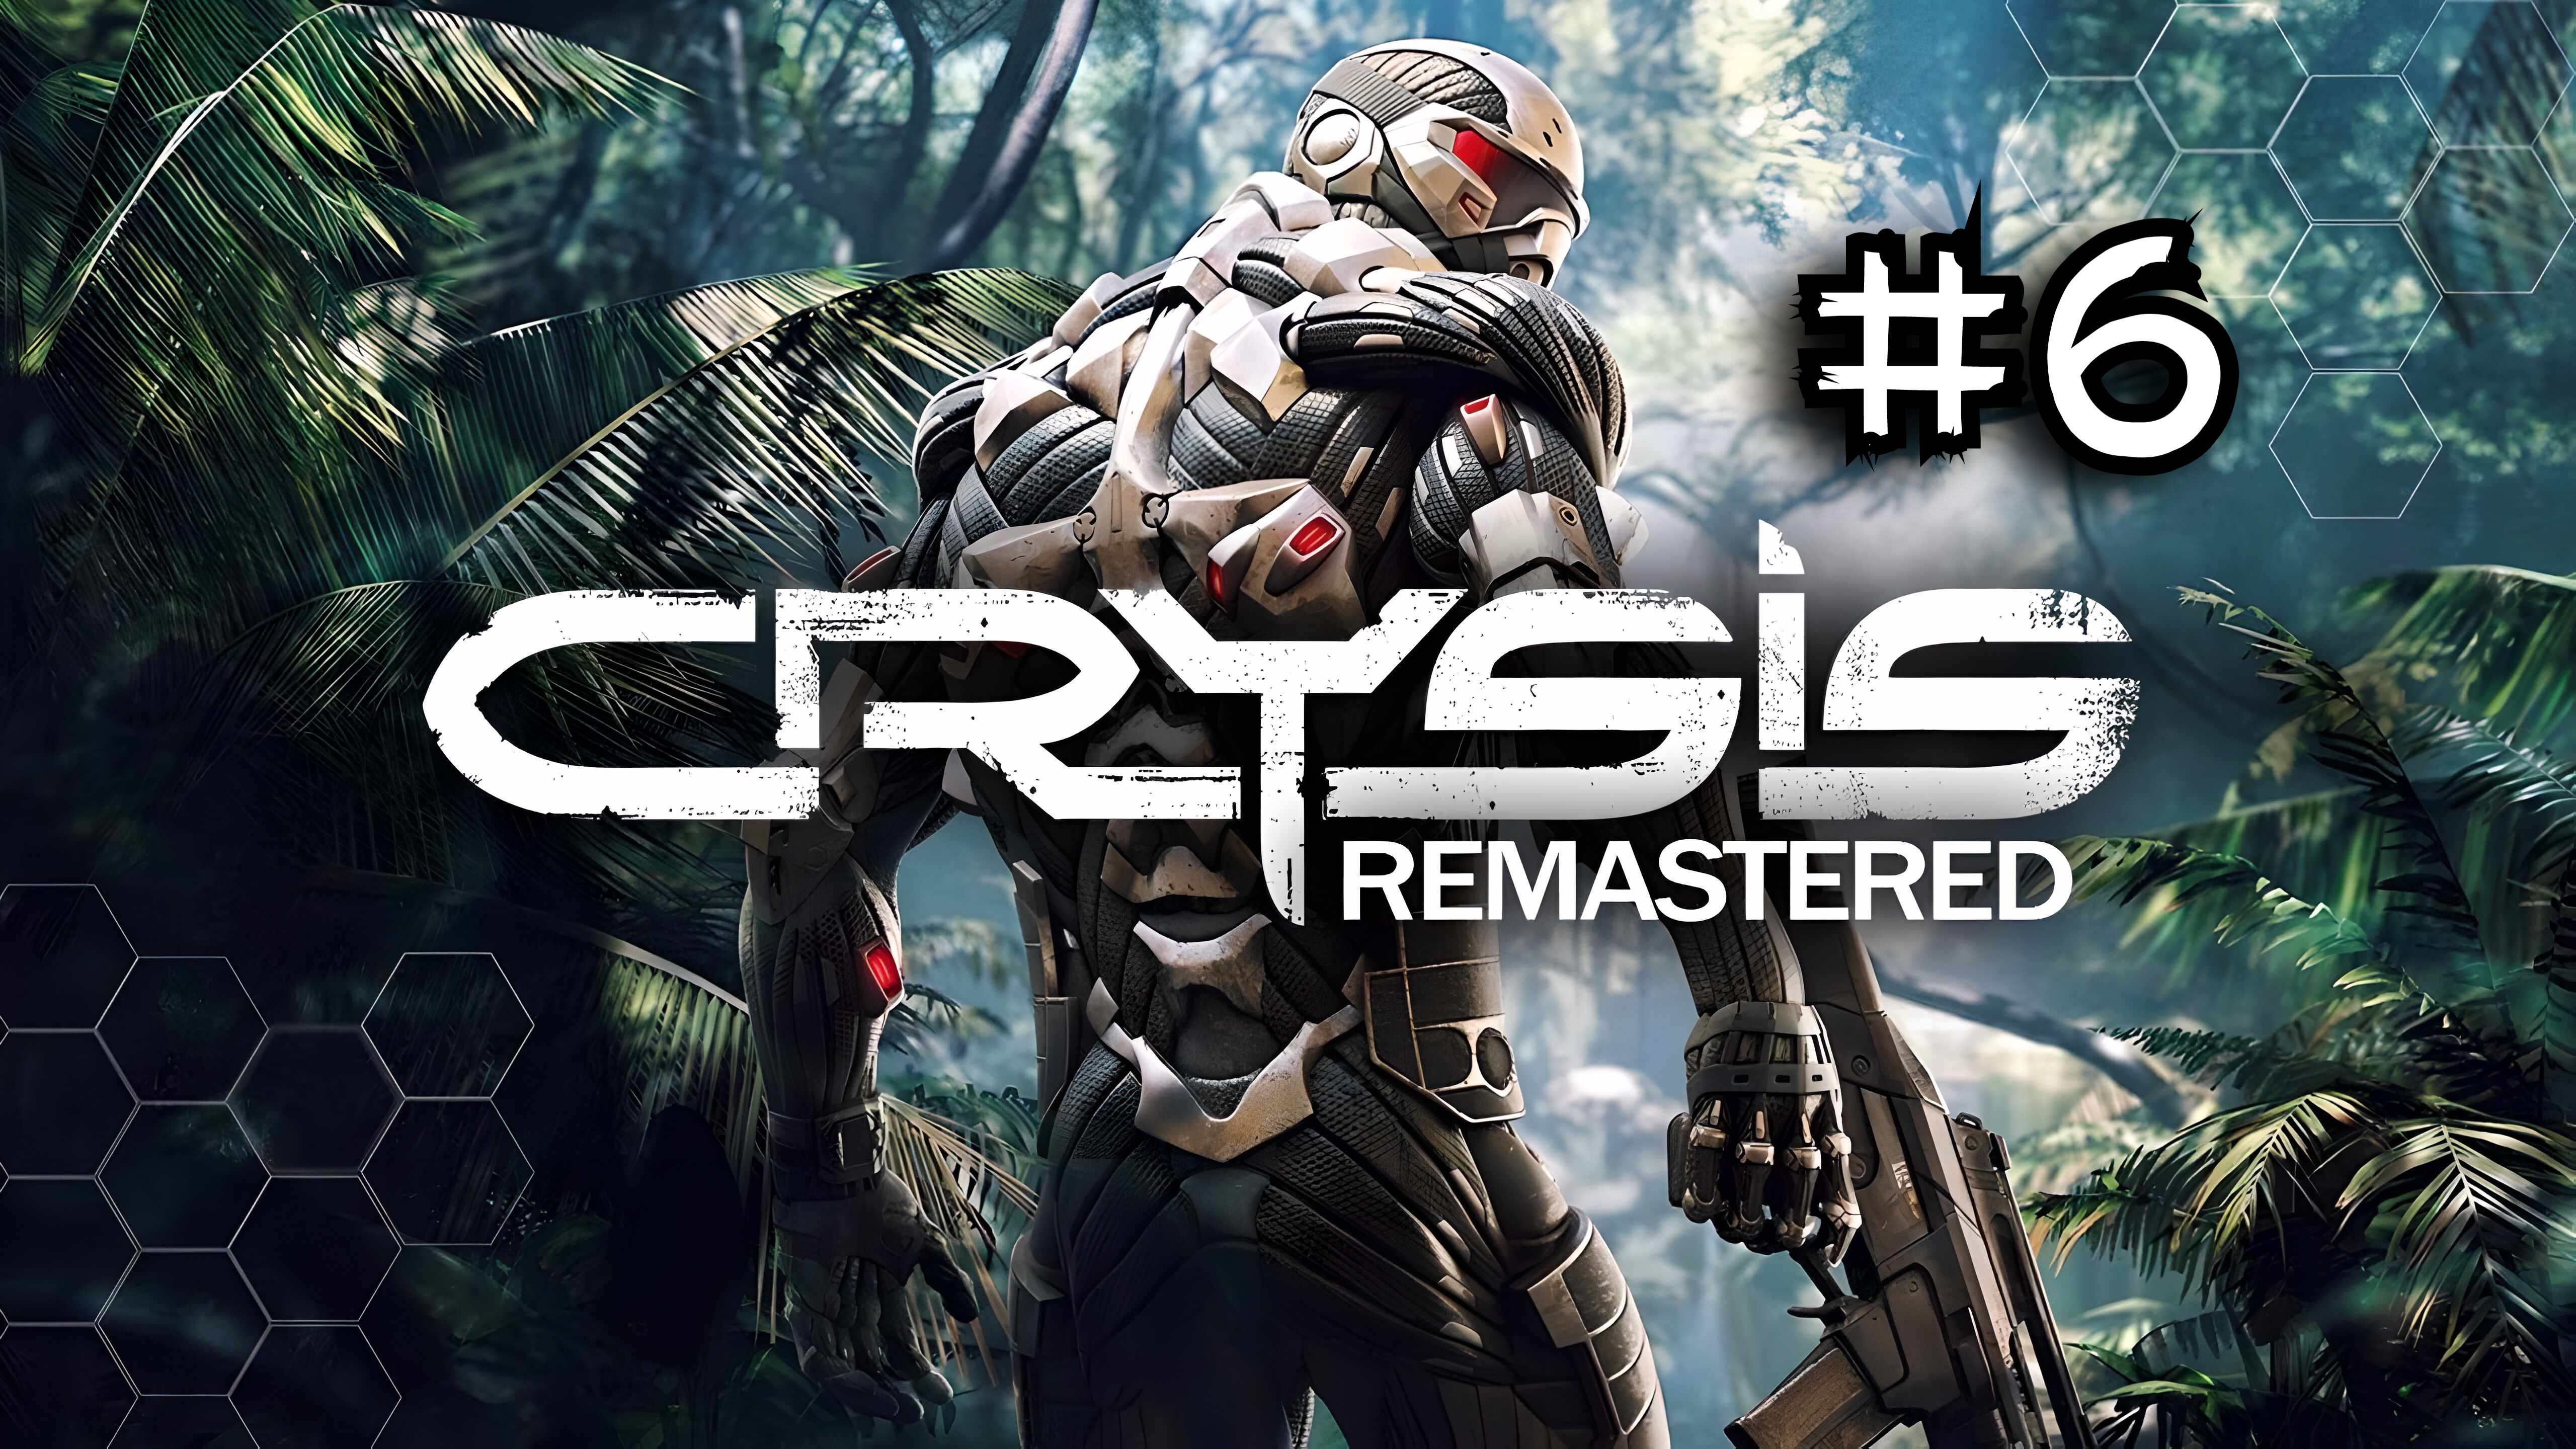 Crysis Remastered #6